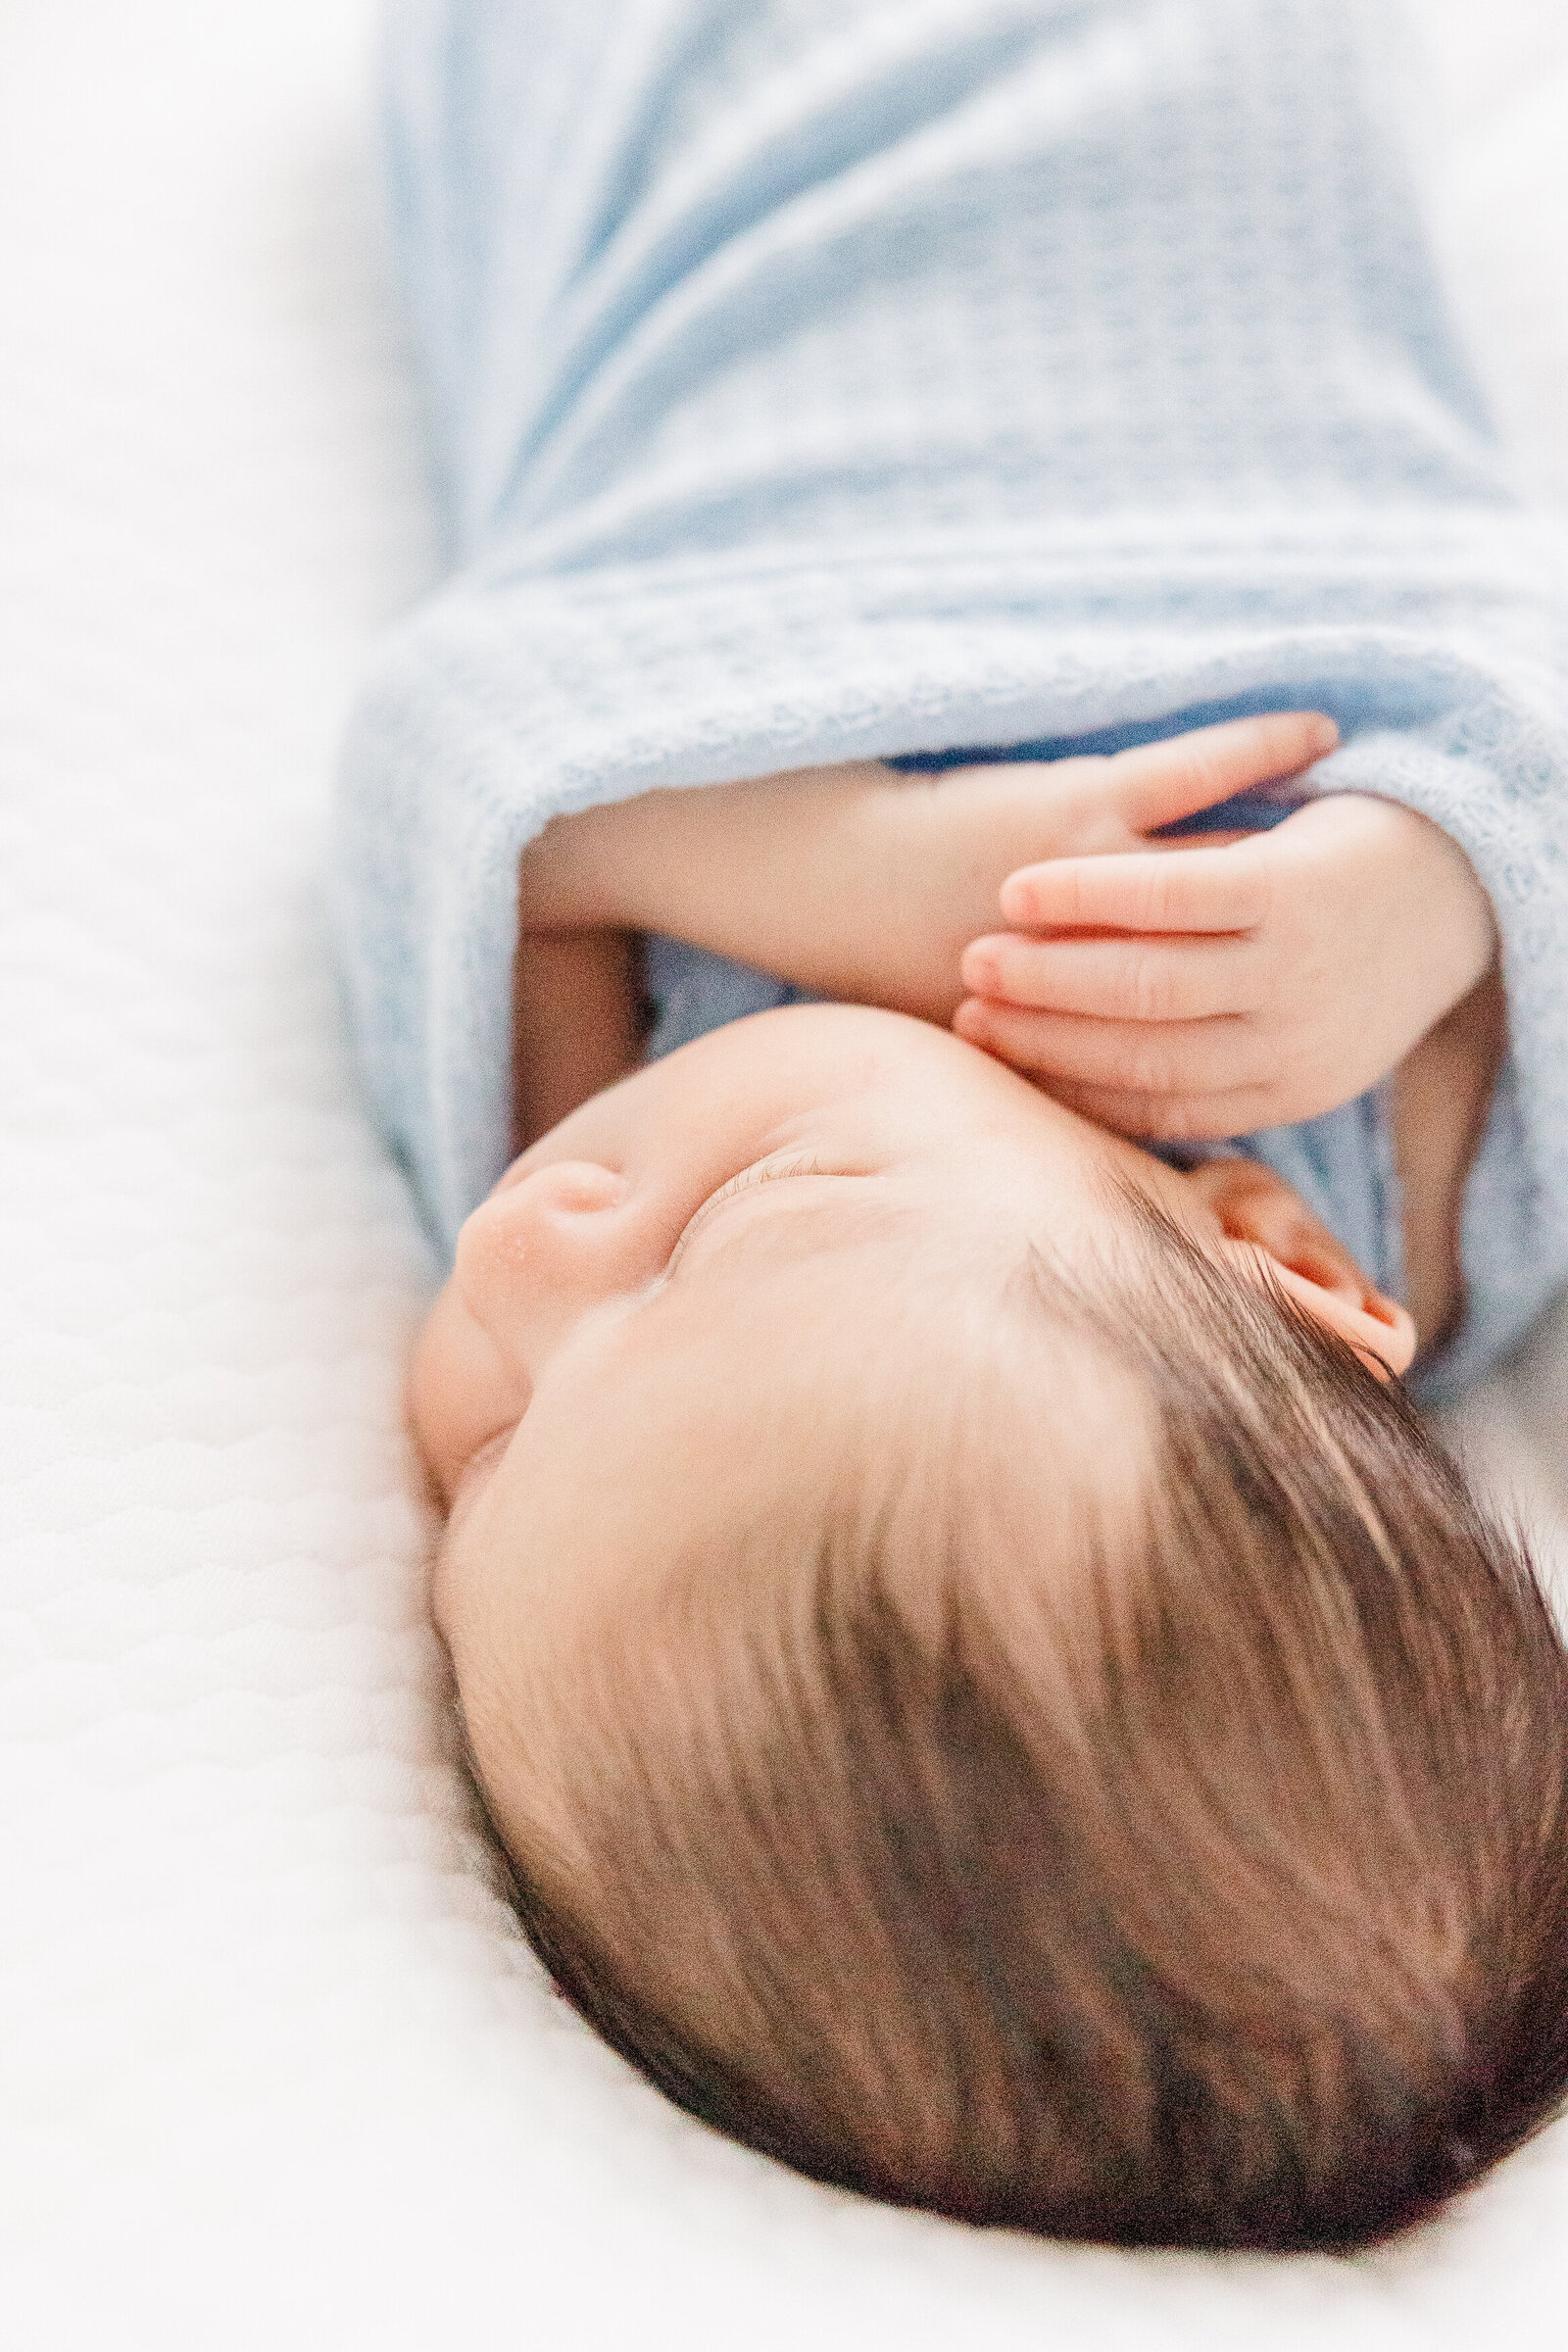 Akron newborn photographer light and airy baby boy asleep in bassinet